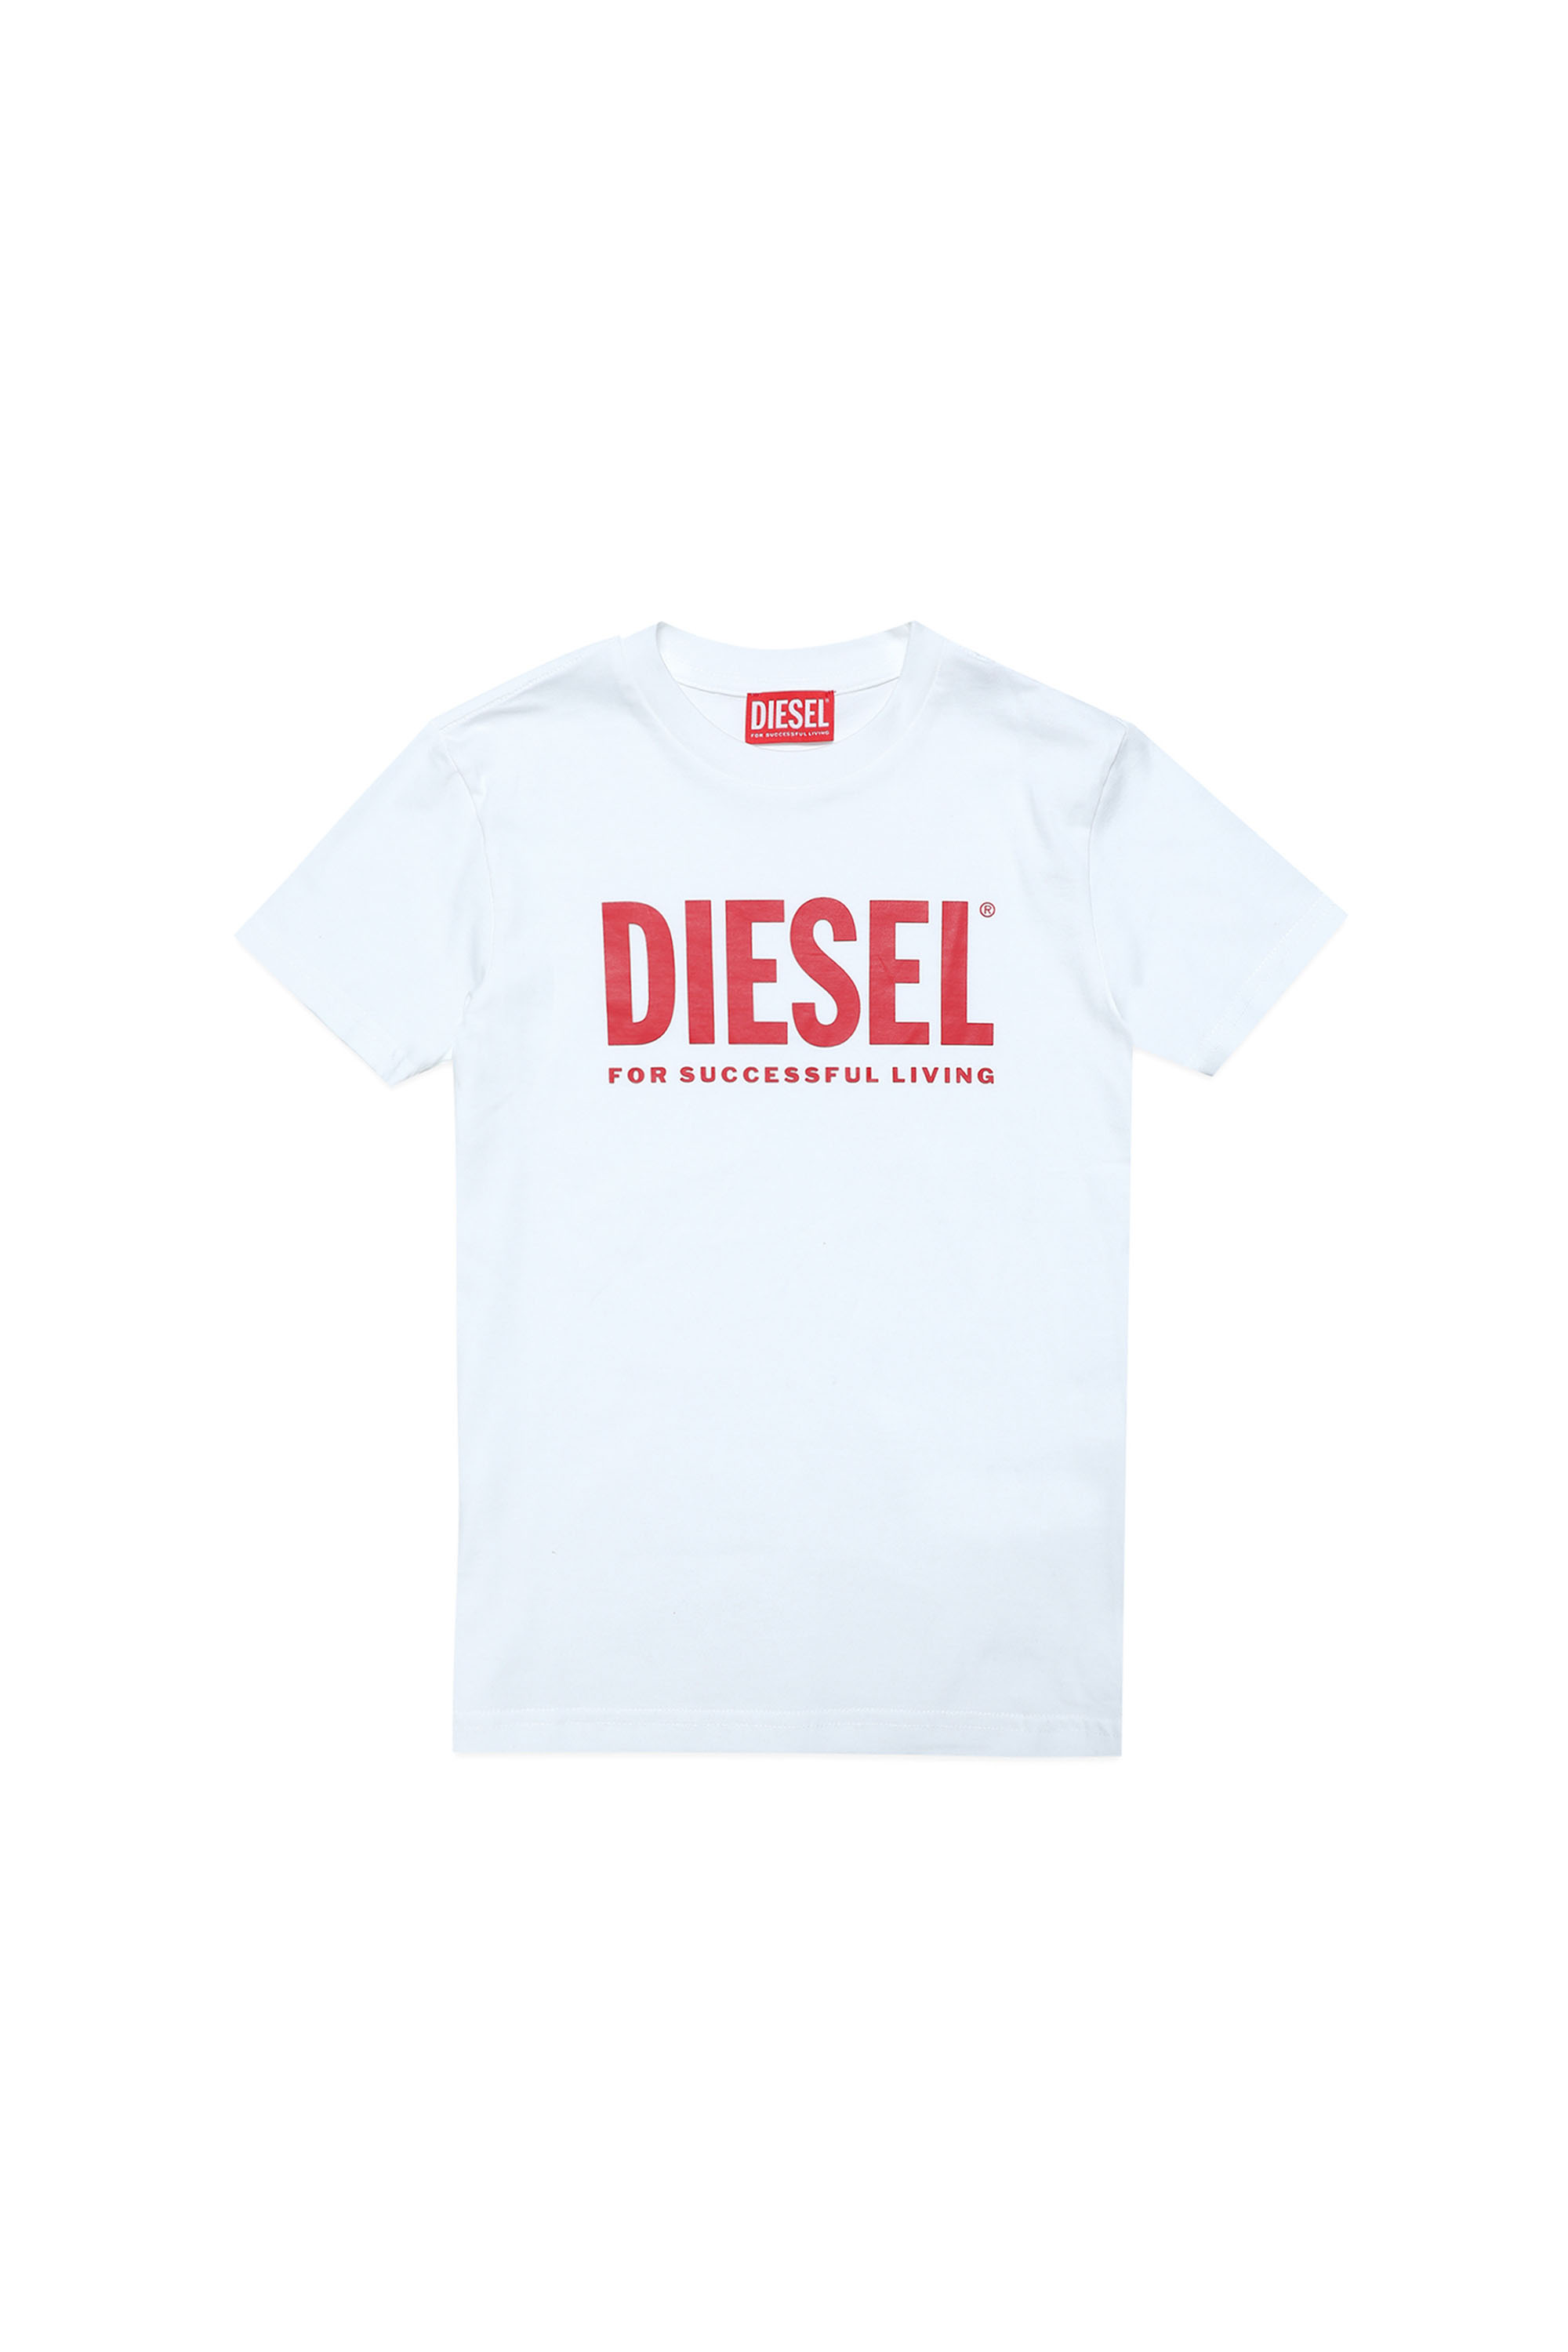 Diesel - TJUSTLOGO, White/Red - Image 1